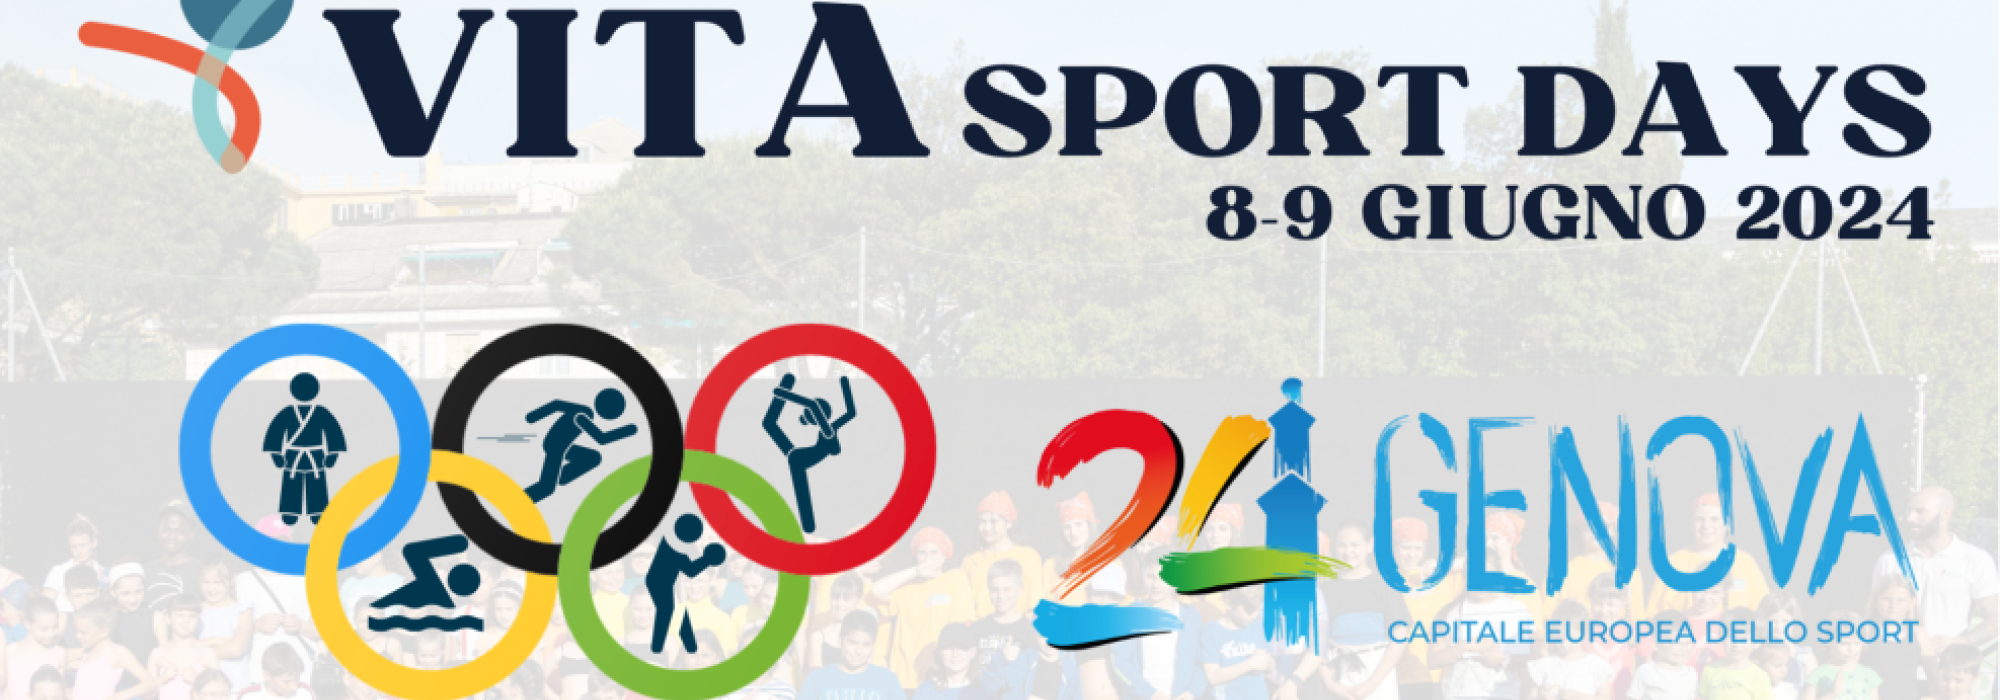 vita sport days 2024